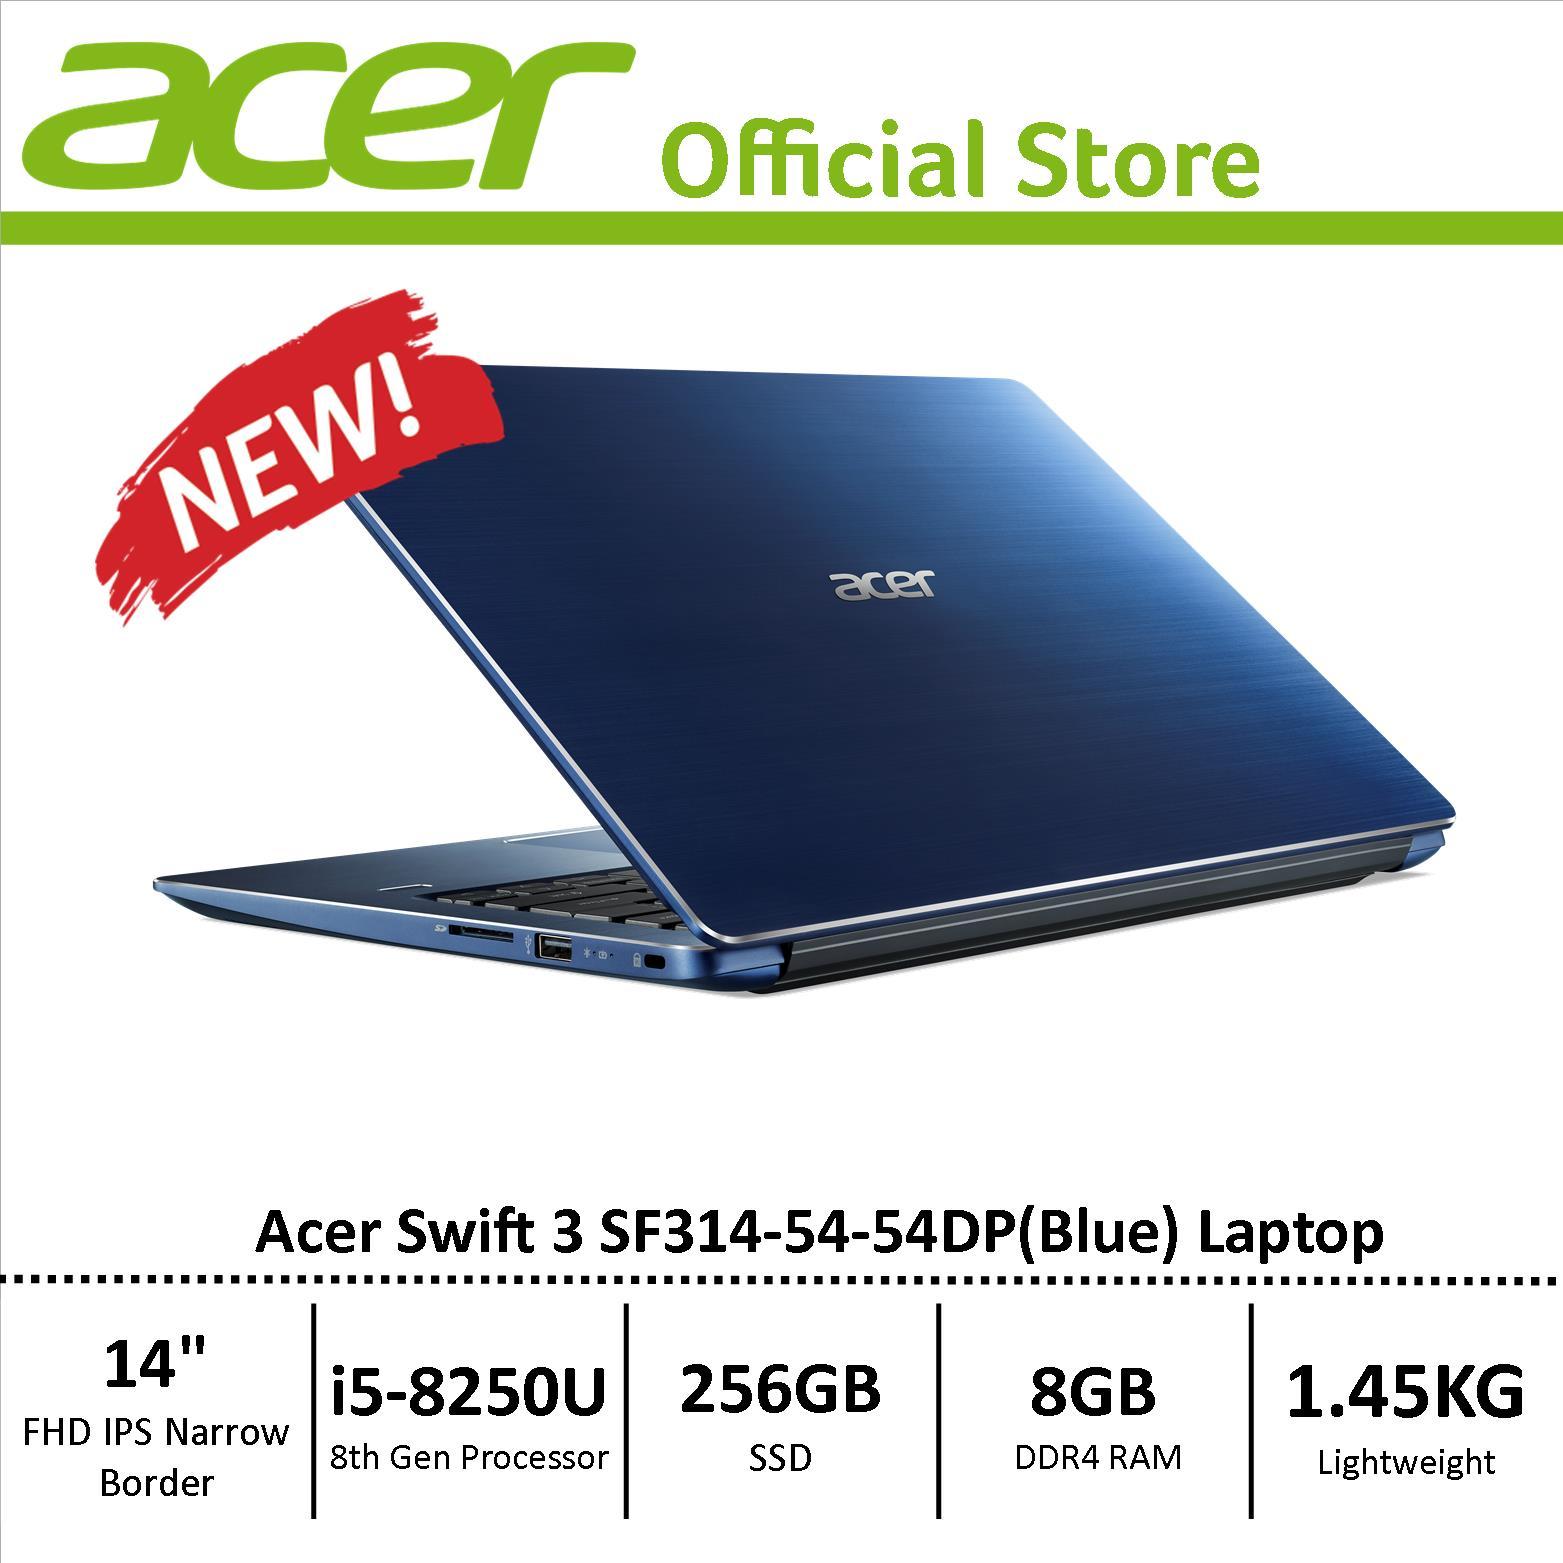 Acer Swift 3 SF314-54 Thin and Light Narrow Border Design Laptop – 8th Generation i5 Processor